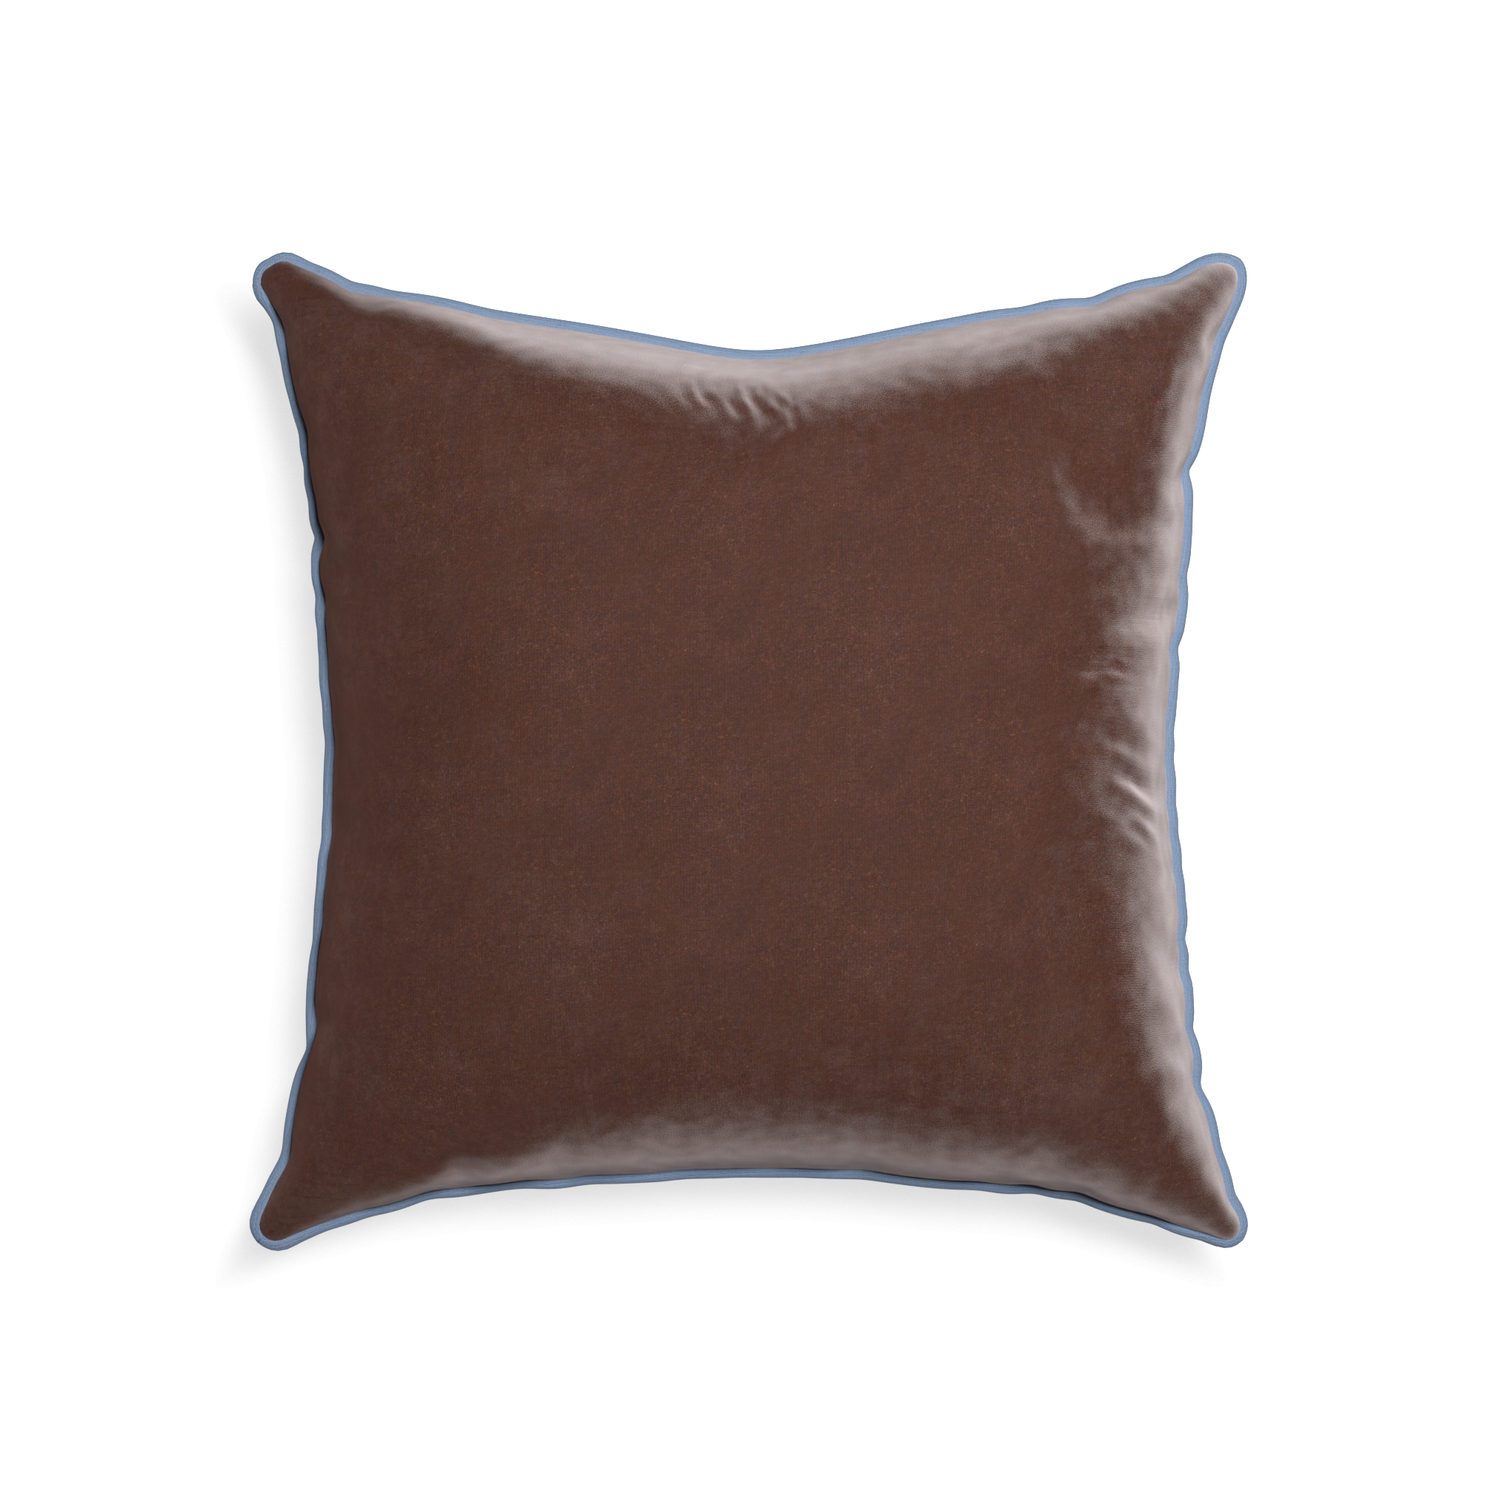 22-square walnut velvet custom pillow with sky piping on white background